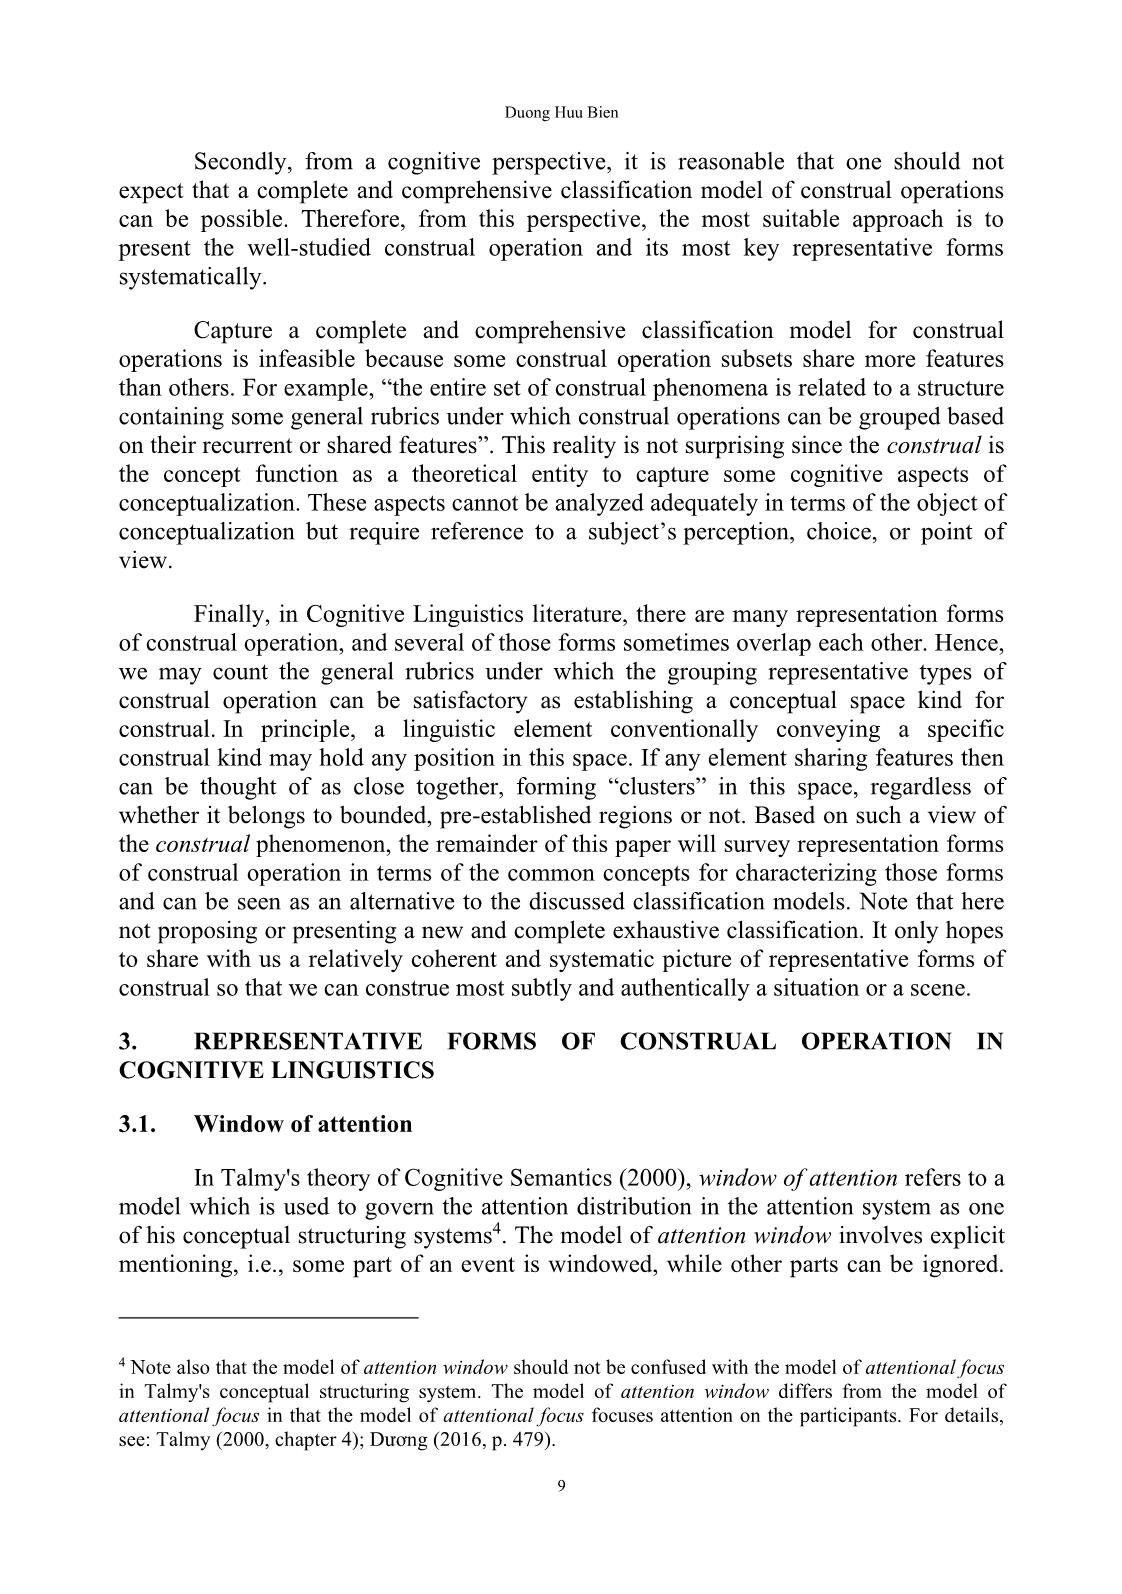 Construal and its representative forms in cognitive linguistics trang 7